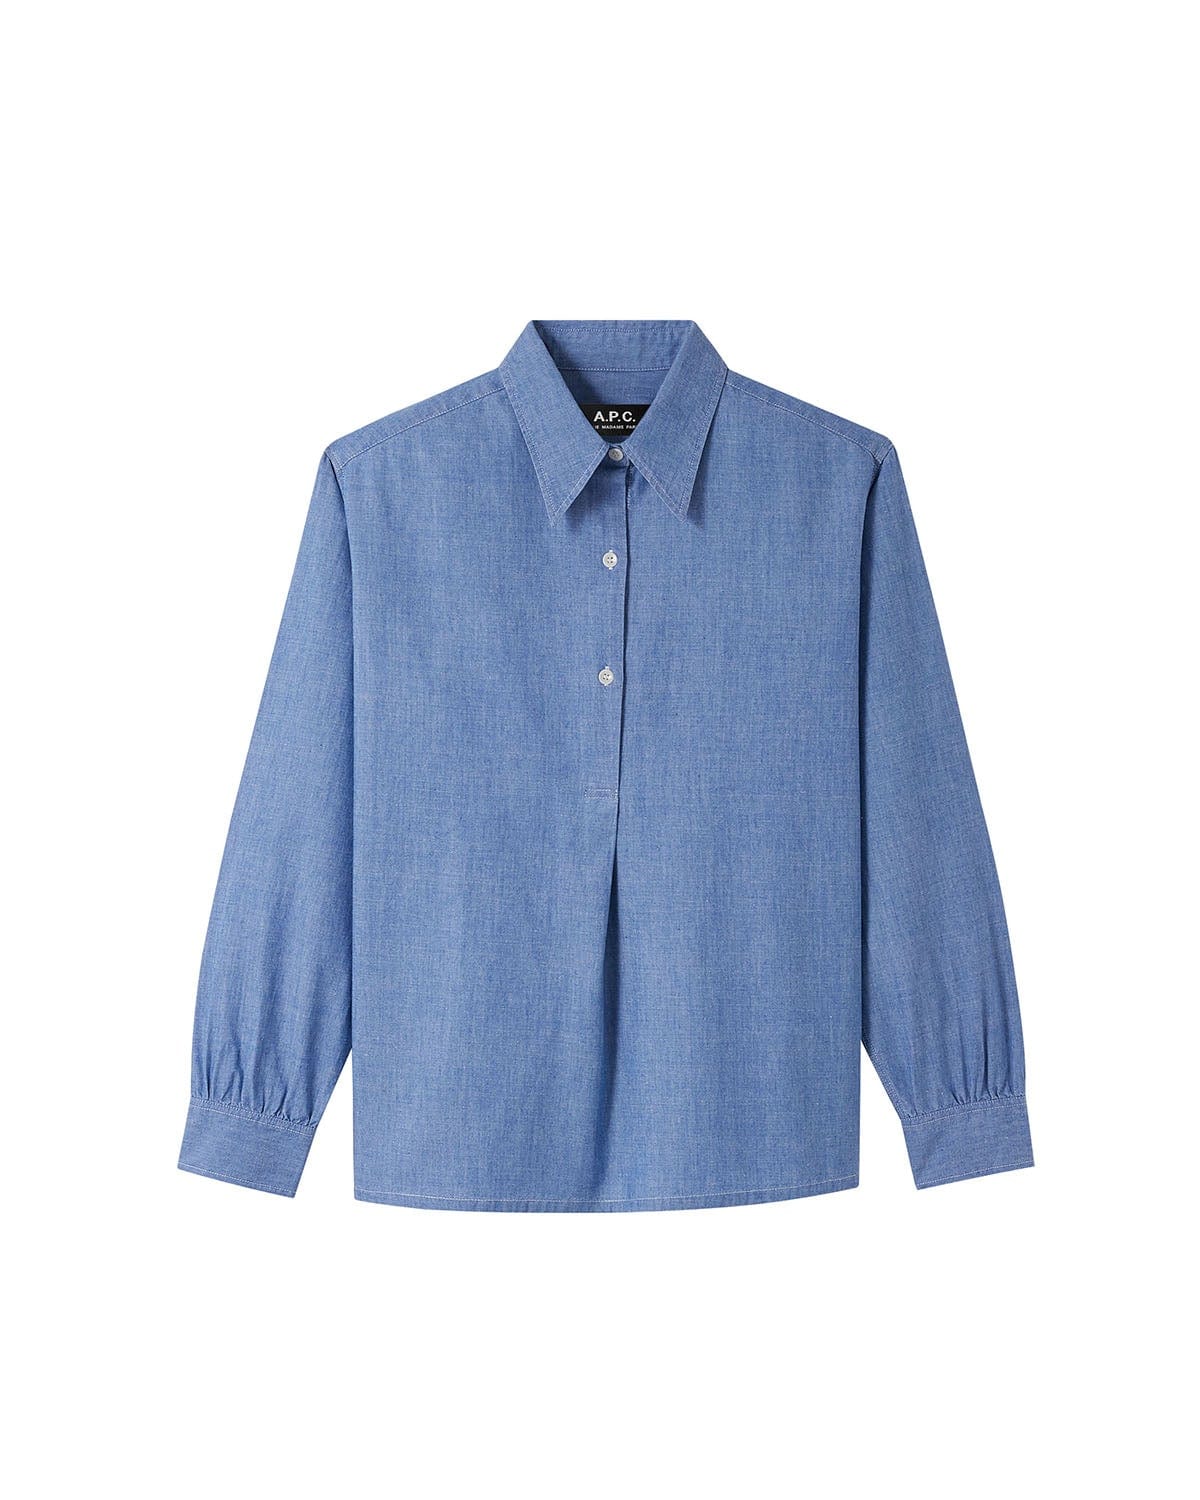 A.P.C. Blouse Henriet Light Blue Shirt L/S Women